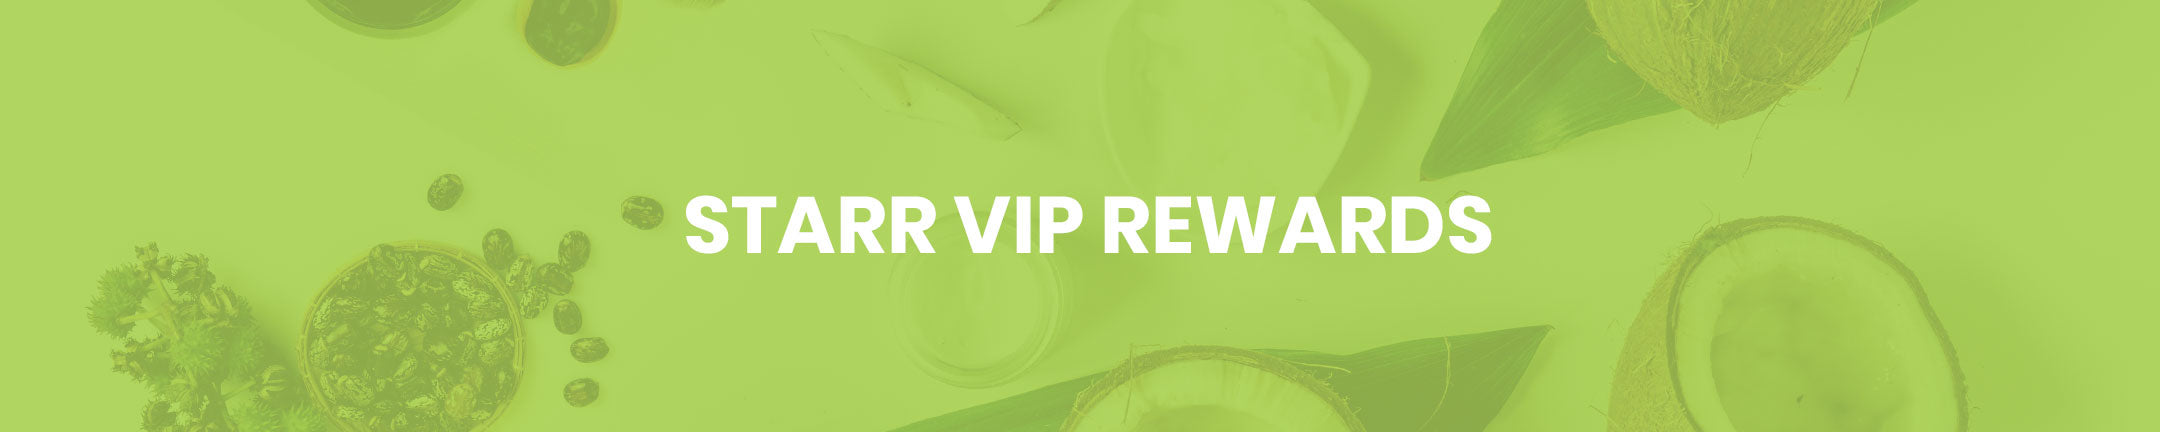 Starr VIP Rewards